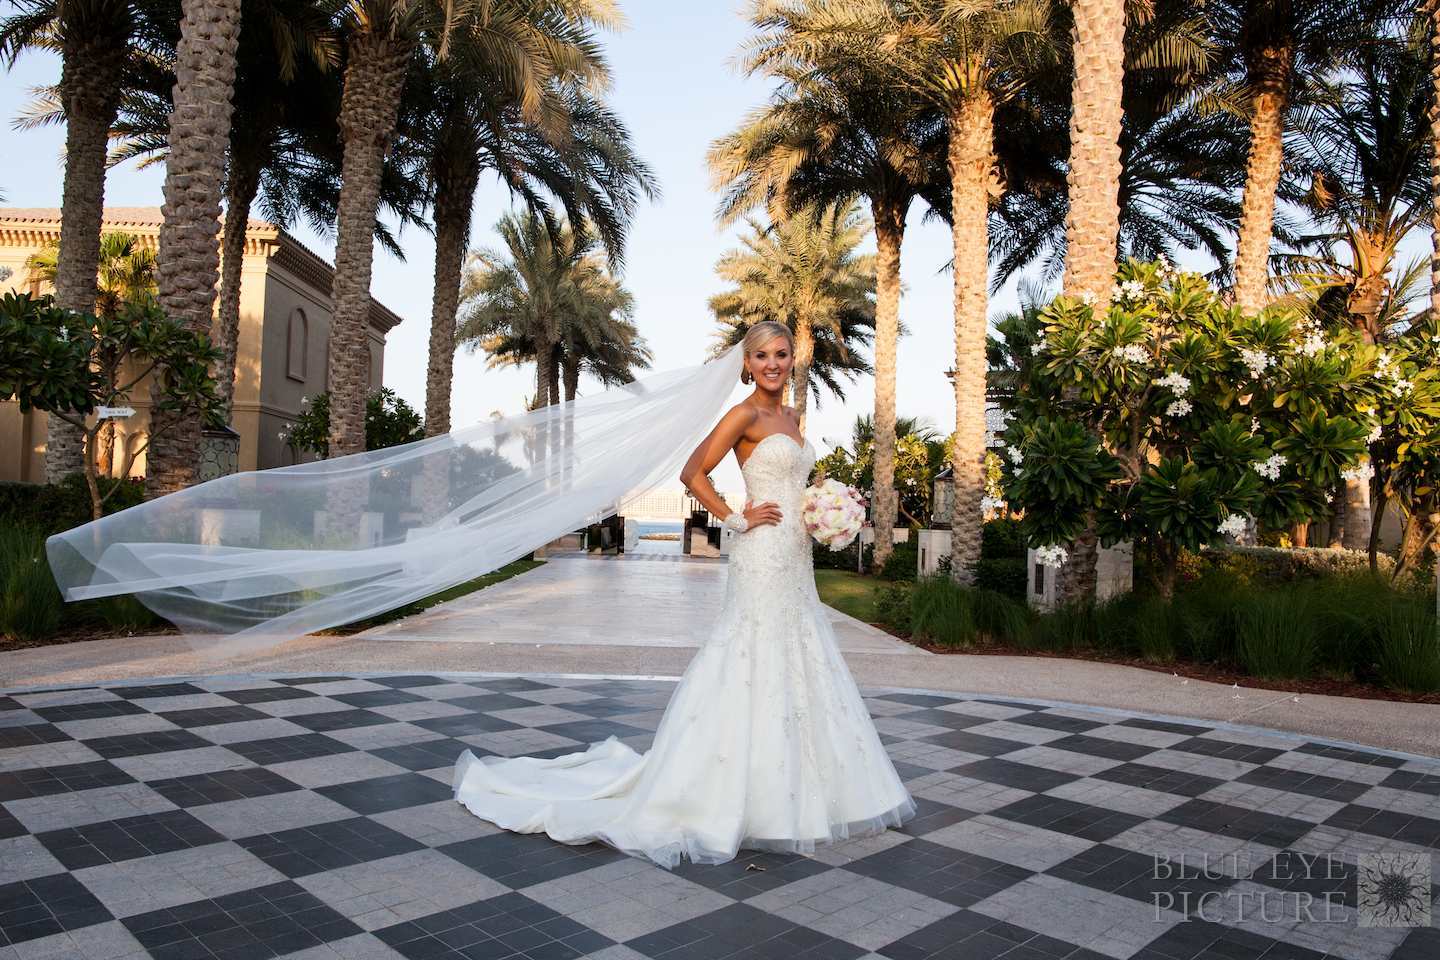 Jason & Emma - Dubai wedding by Blue Eye Photography 